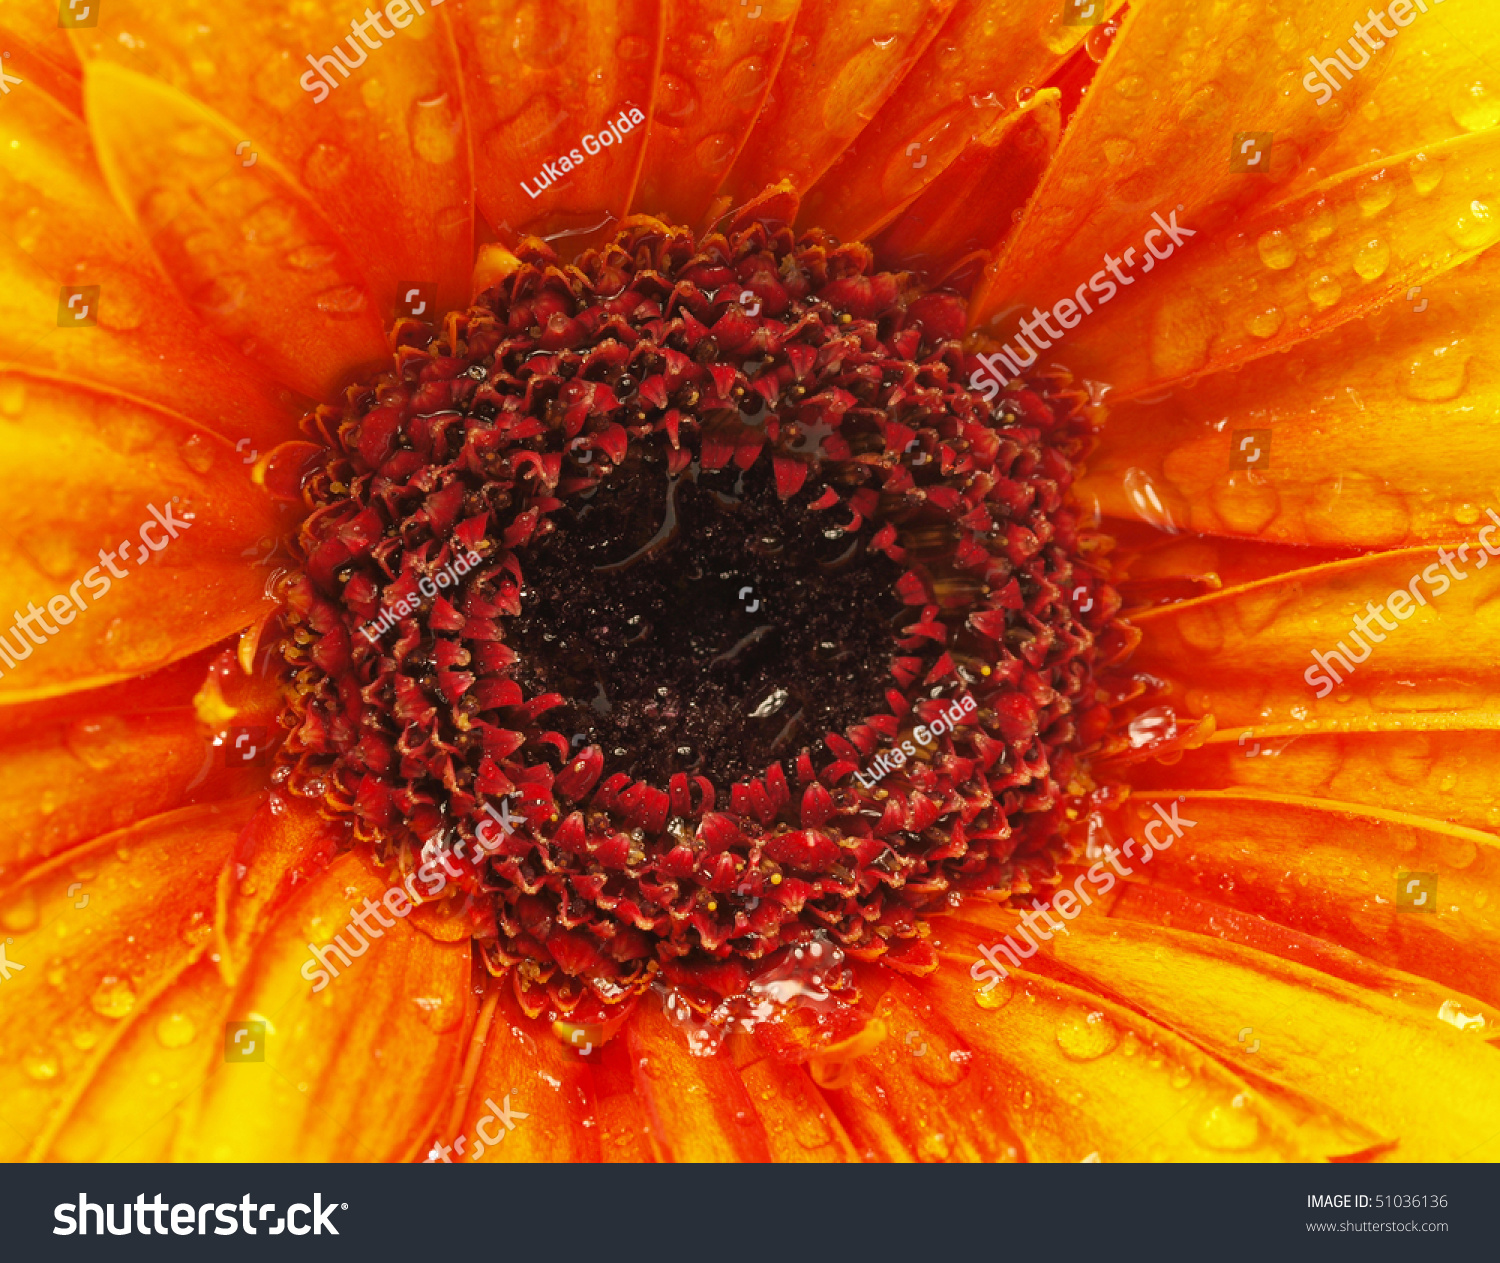 Photo of gerber flower, very close-up #51036136